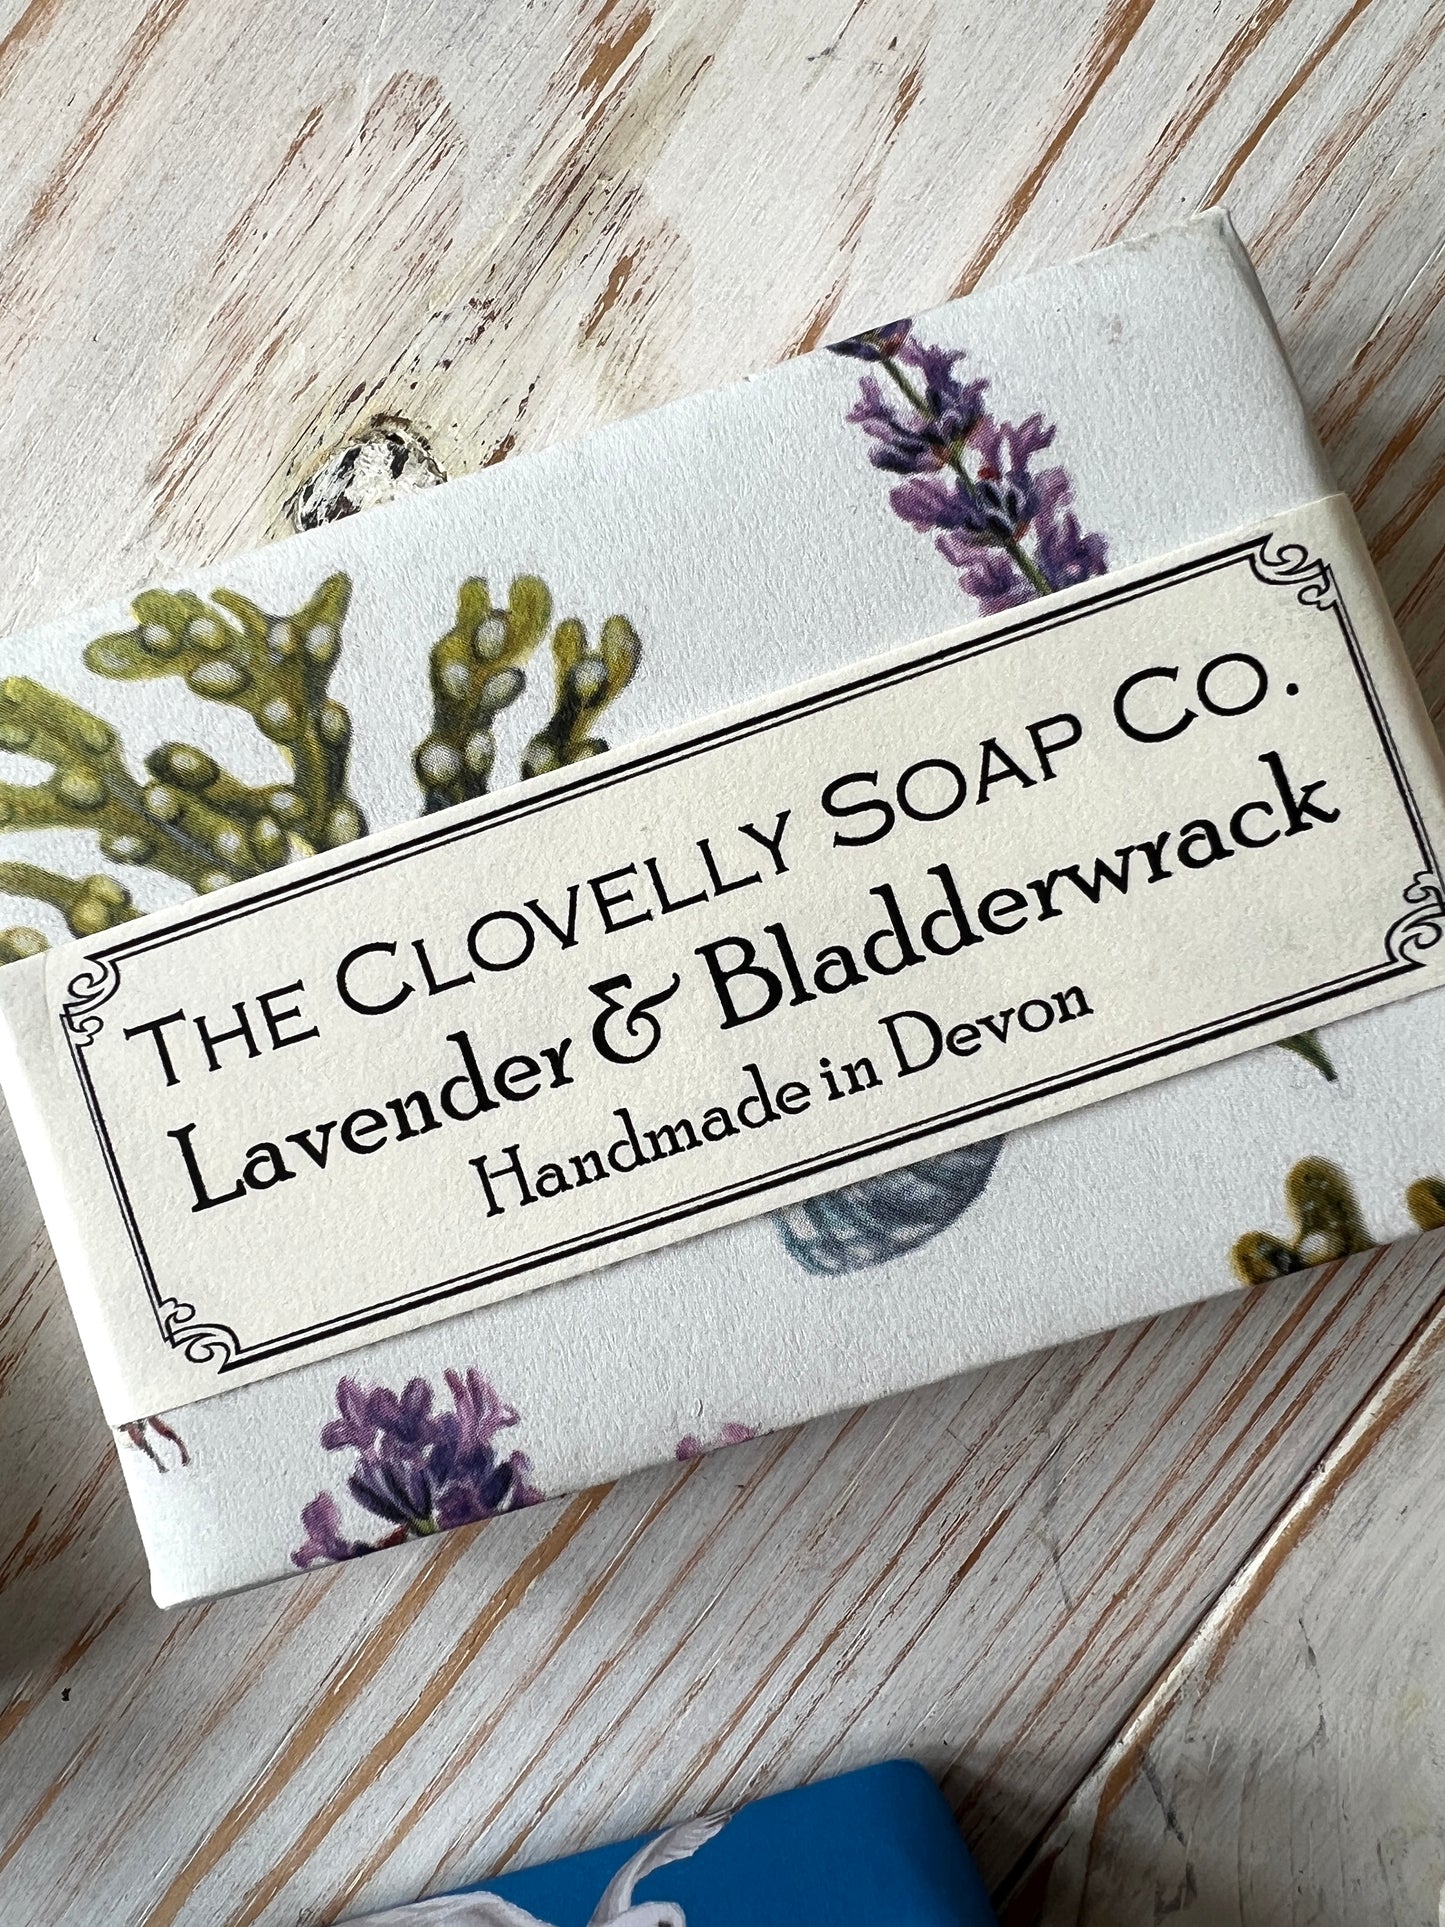 Lavender & Bladderwrack handmade wrapped artisan sopa from Devon